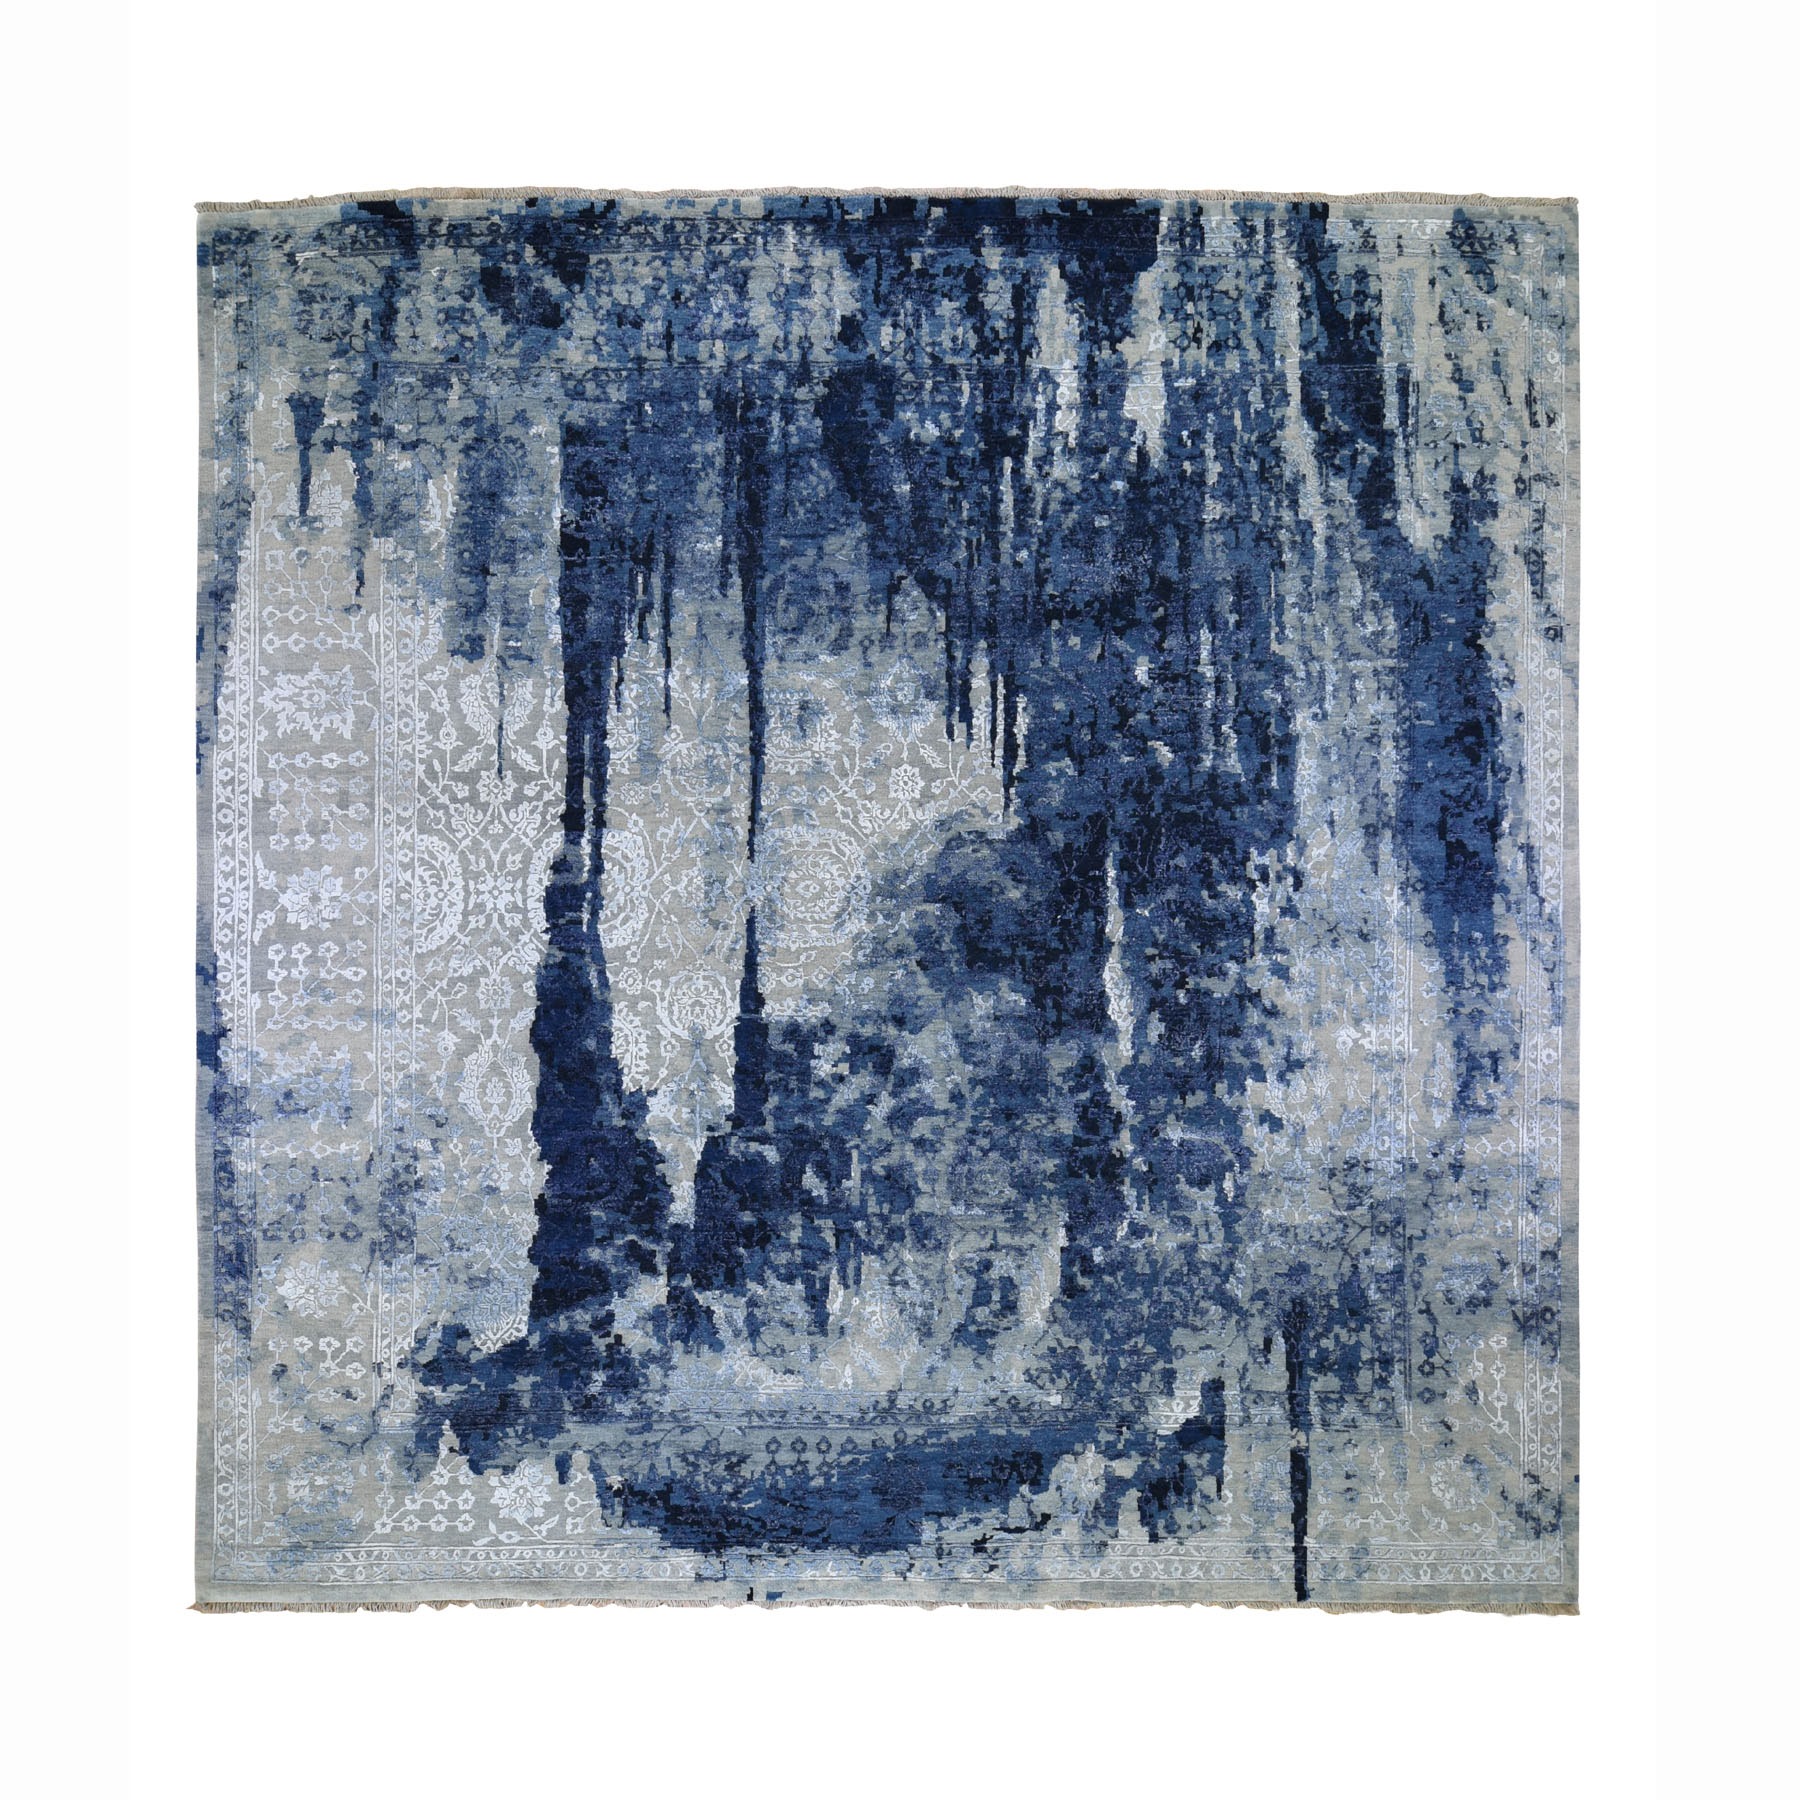 12-1 x12-1  Square Wool And Silk Shibori Design Tone On Tone Hand Knotted Oriental Rug 